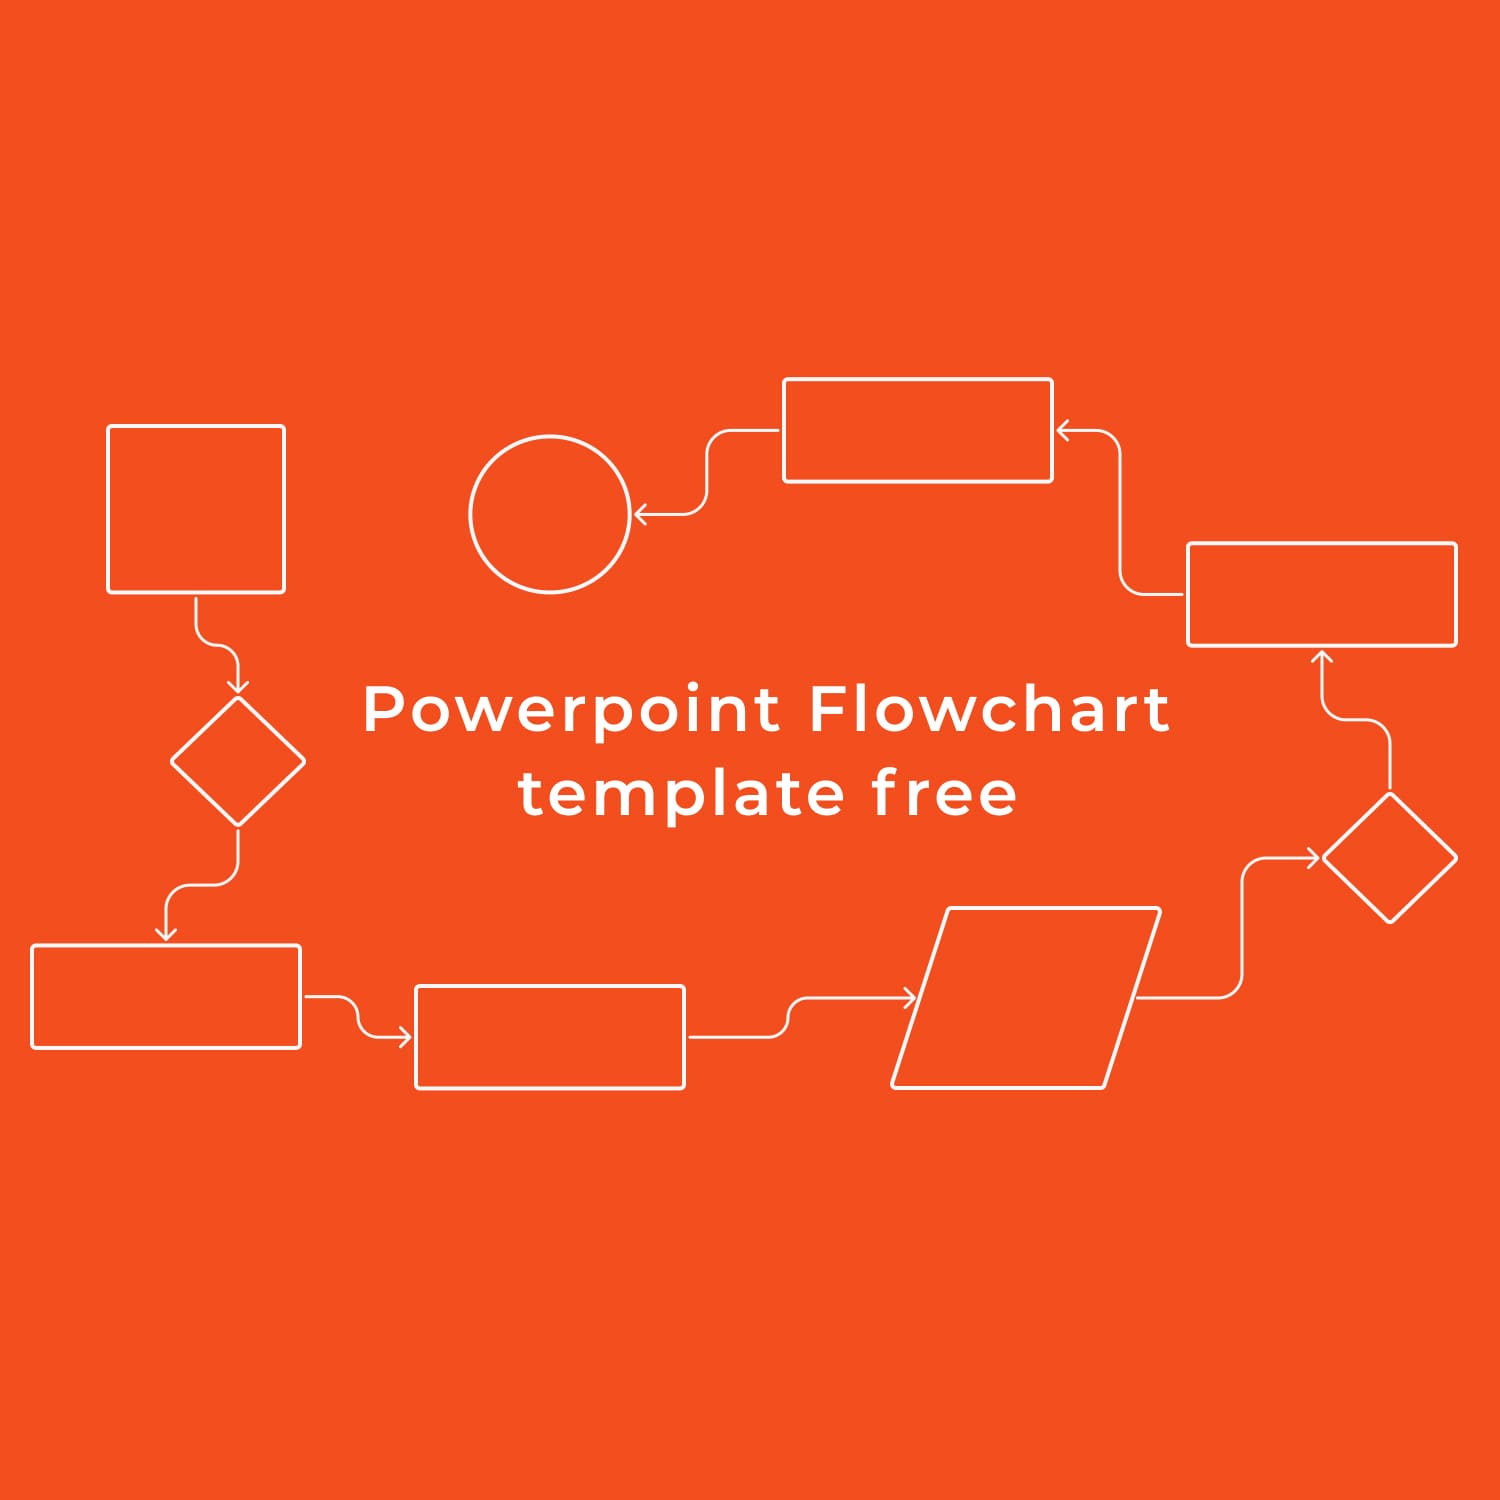 Powerpoint Flowchart Template Free 1500x1500 1.